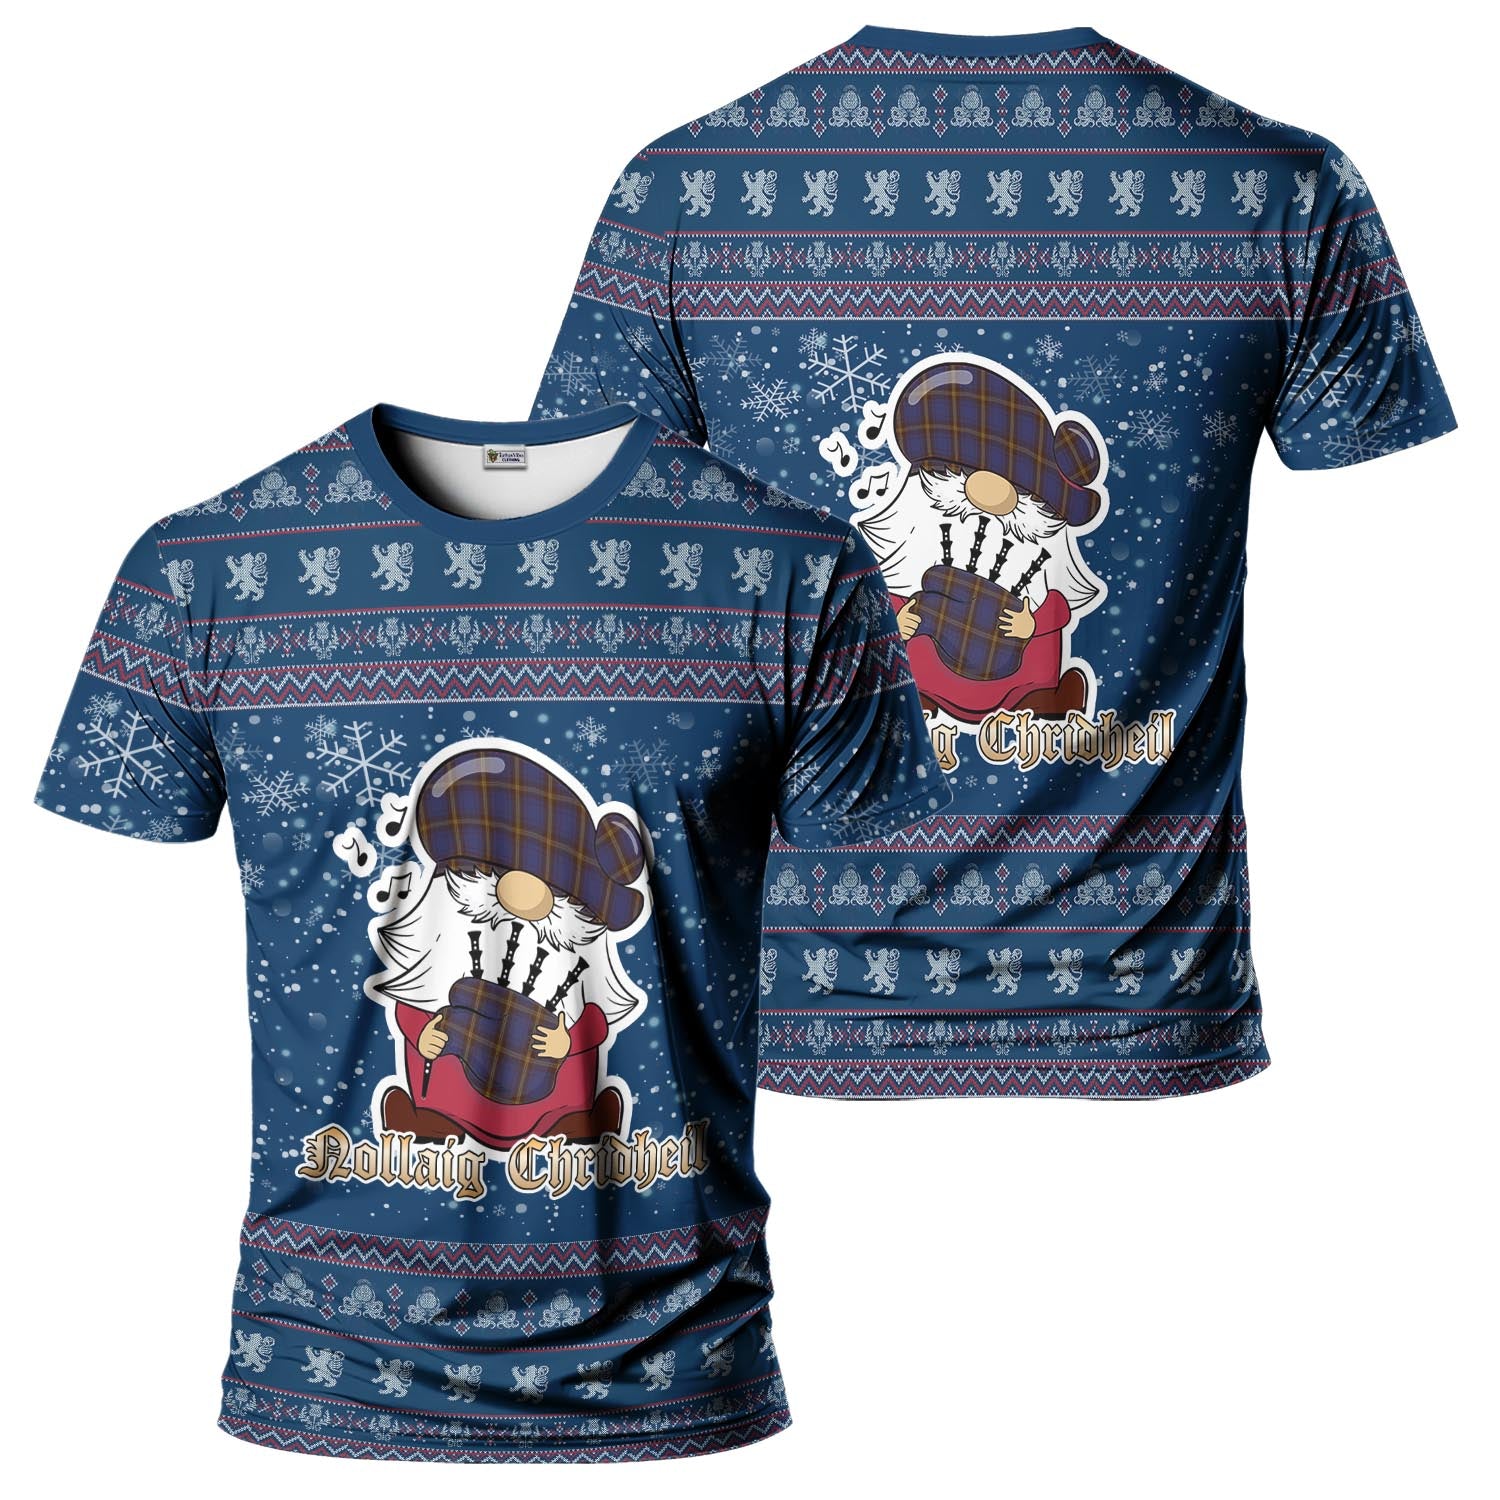 Sligo County Ireland Clan Christmas Family T-Shirt with Funny Gnome Playing Bagpipes Kid's Shirt Blue - Tartanvibesclothing